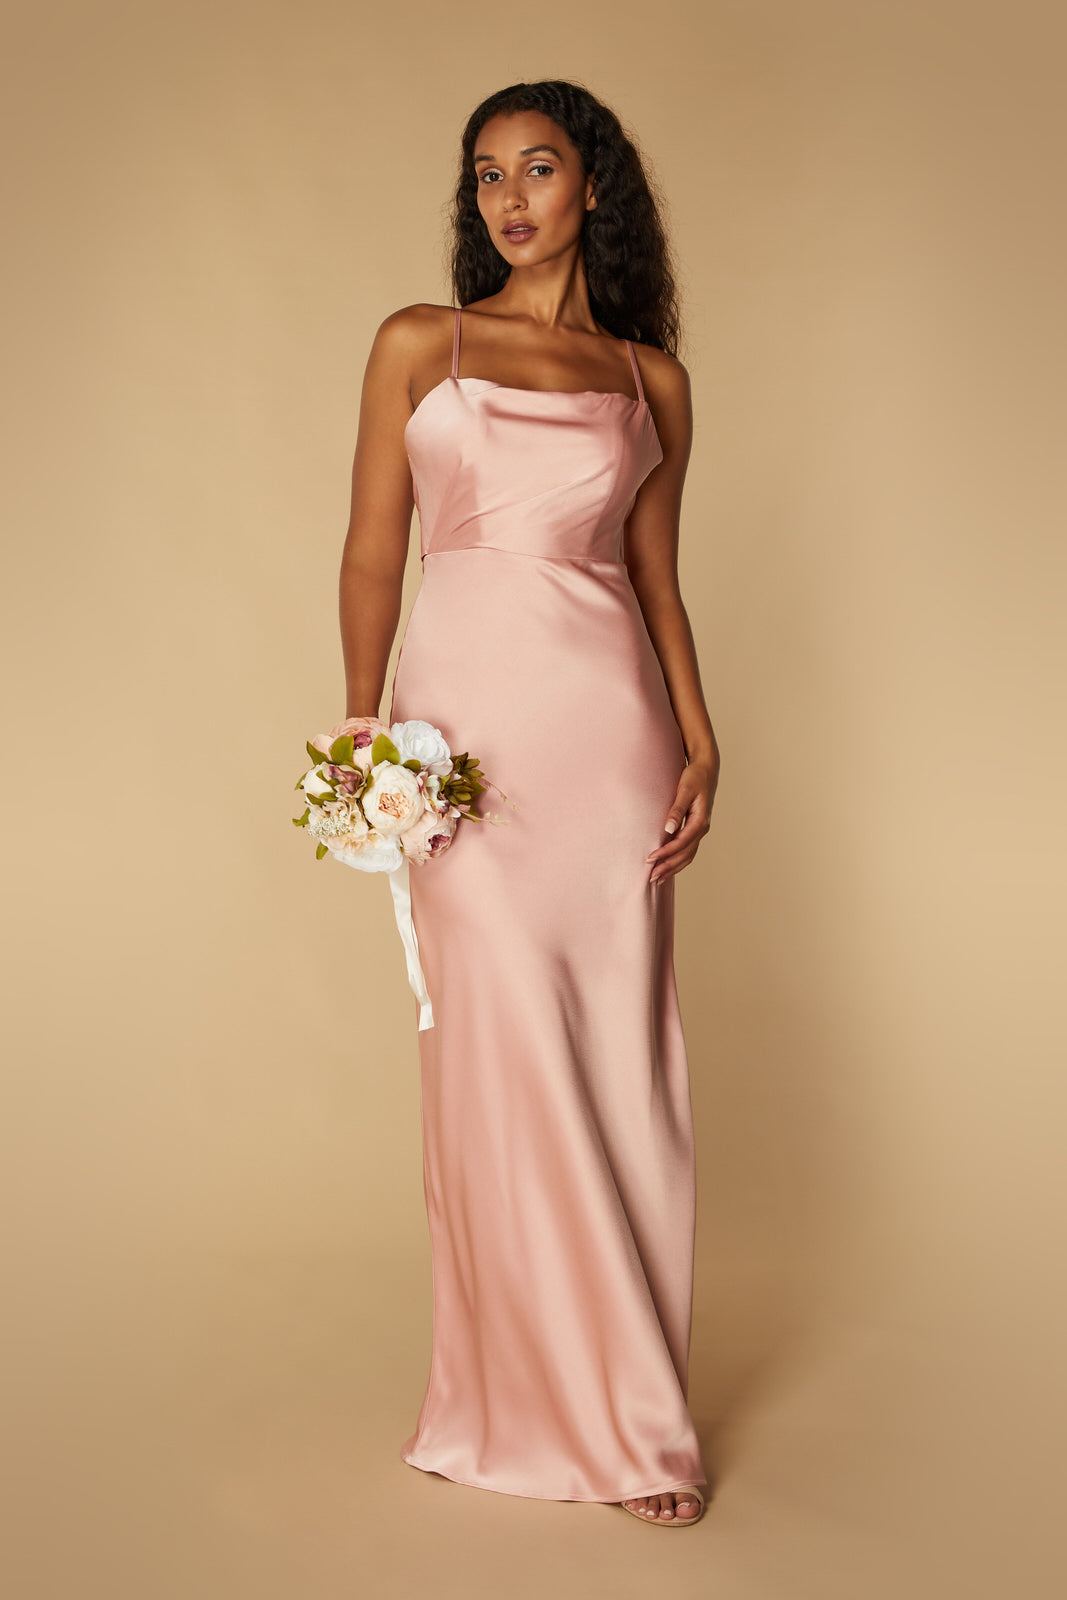 Jarlo Rose pink satin maxi dress with tie back detail